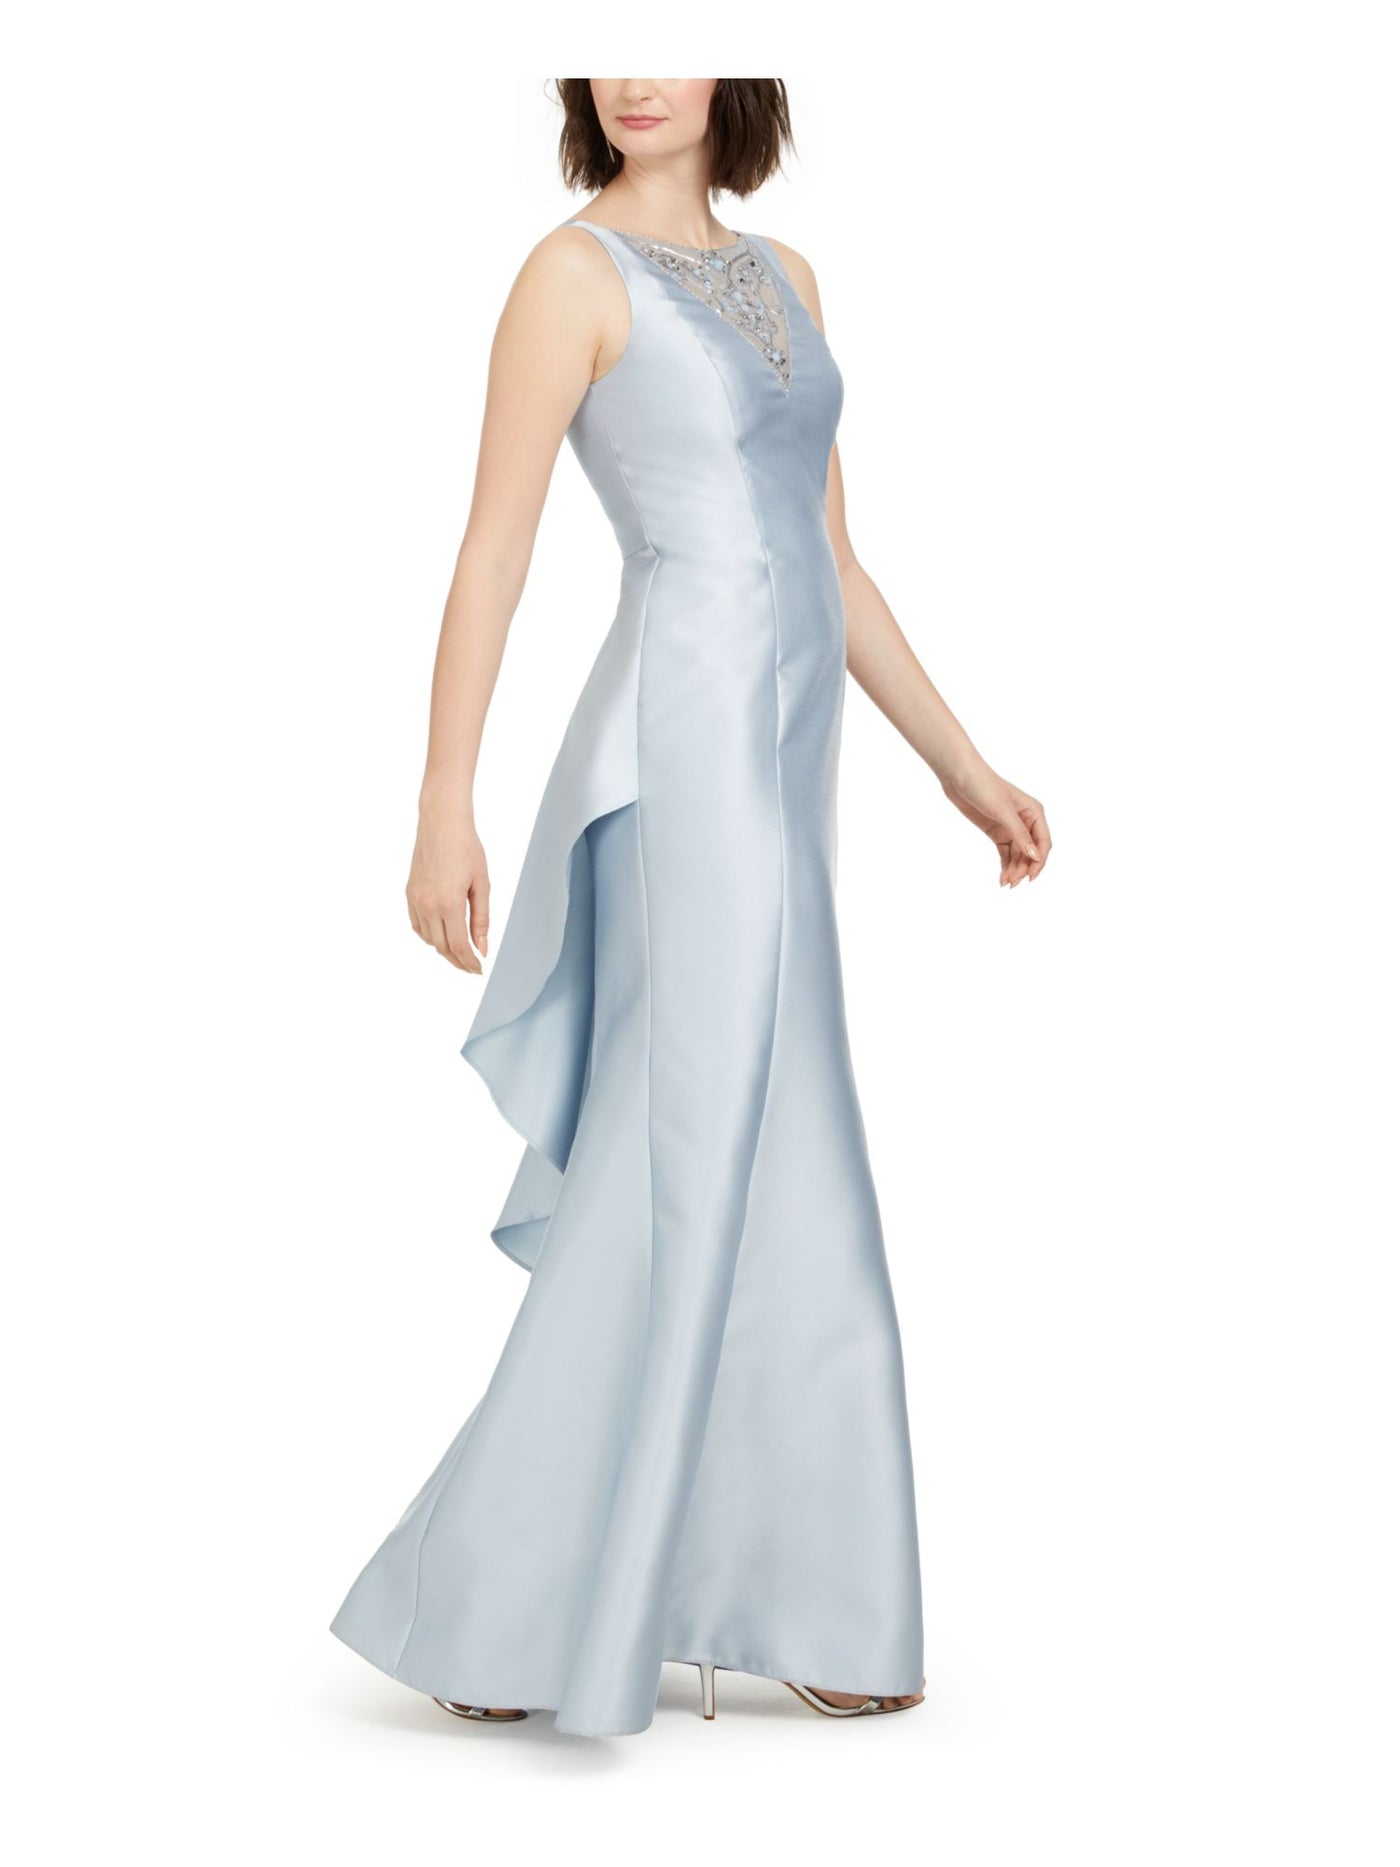 ADRIANNA PAPELL Womens Light Blue Embellished Ruffled Satin Sleeveless Illusion Neckline Full-Length Formal A-Line Dress 4